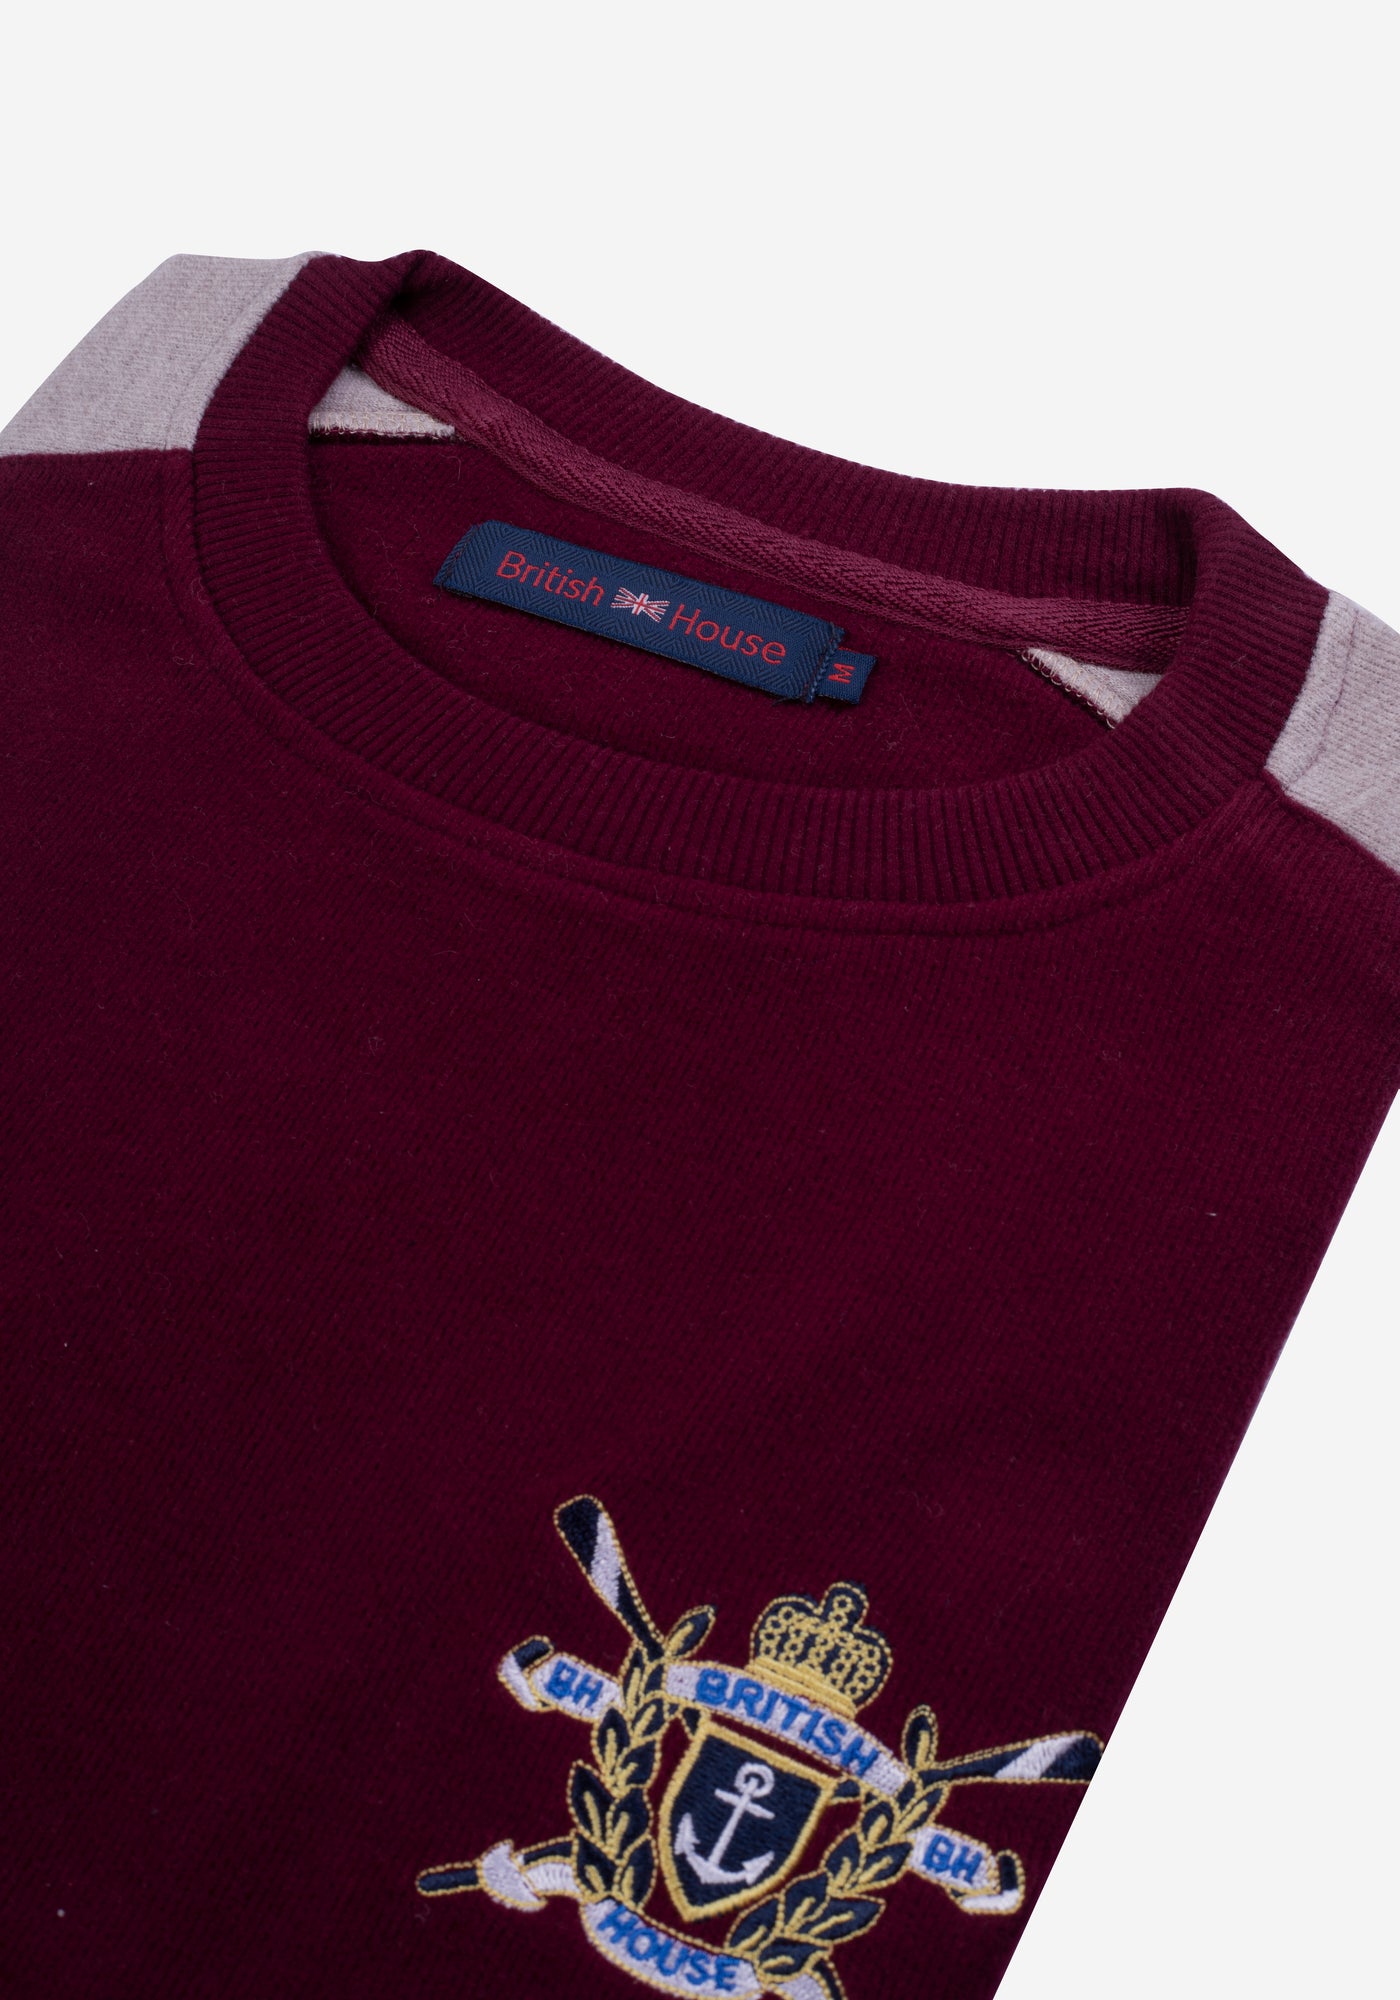 Burgundy Grey Cotton Sweatshirt – British House